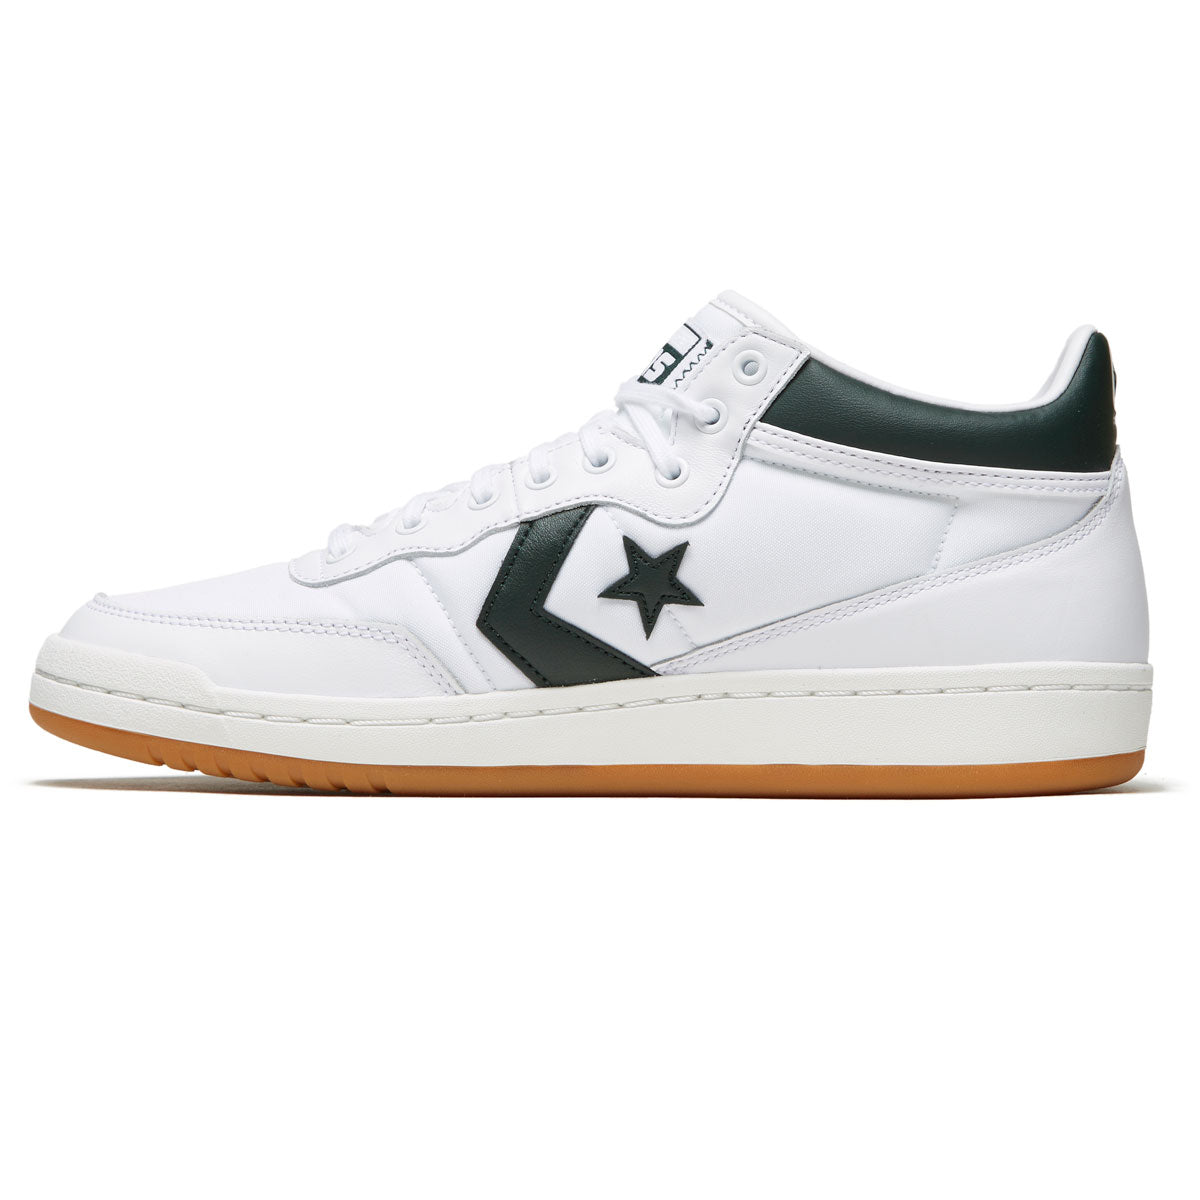 Converse Fastbreak Pro Leather Mid Shoes - White/Deep Emerald/Gum image 2